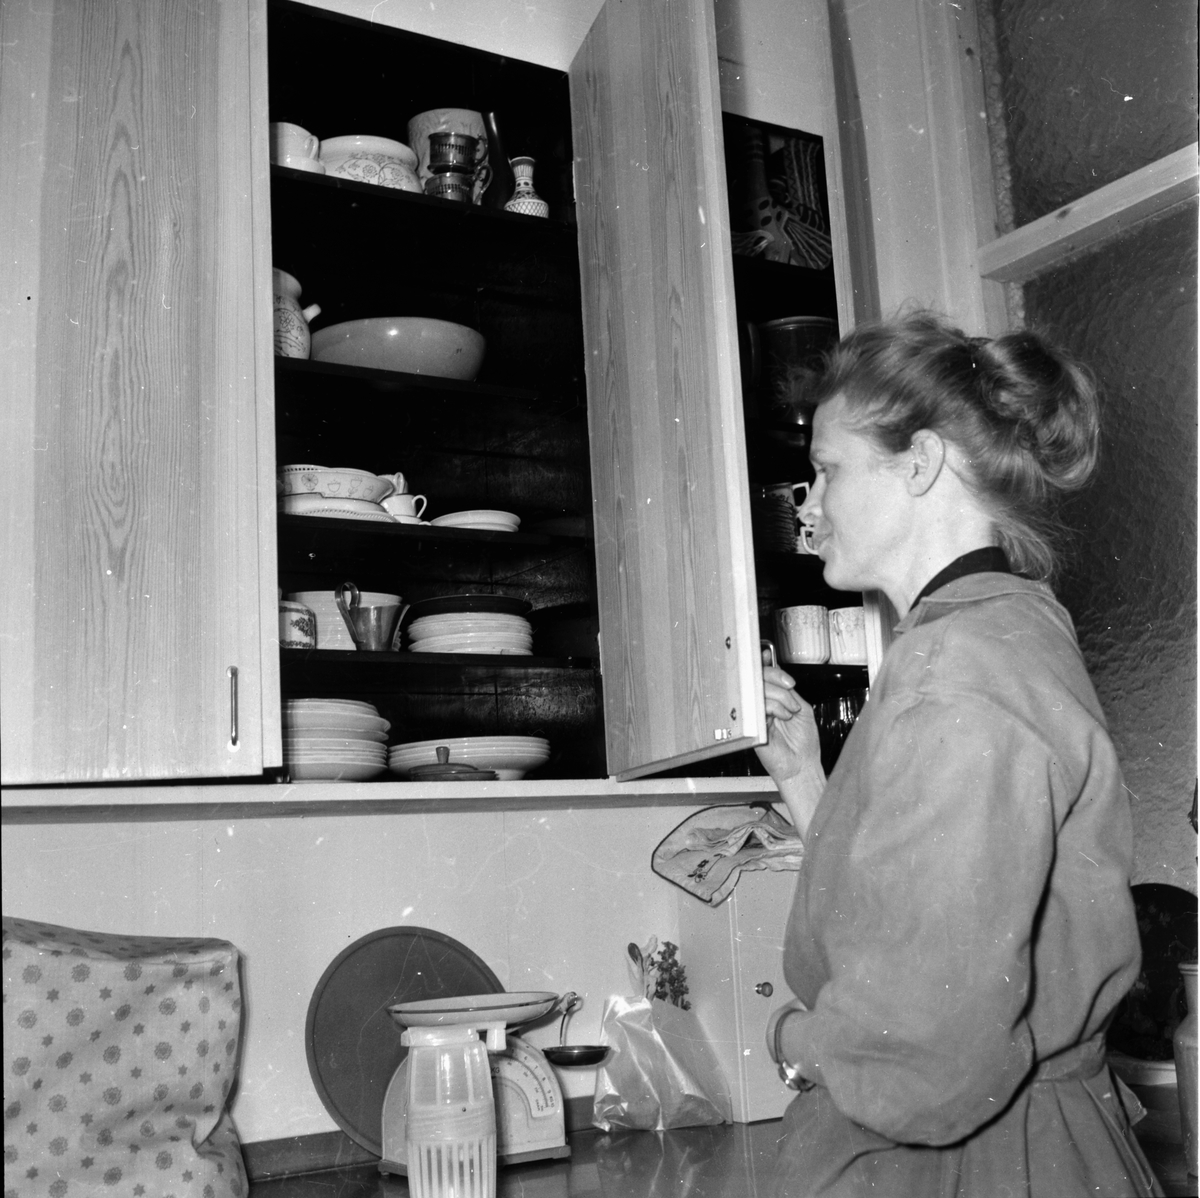 Sture o Kerstin Ekengren. Bostadsbygge.
Järvsö januari 1956